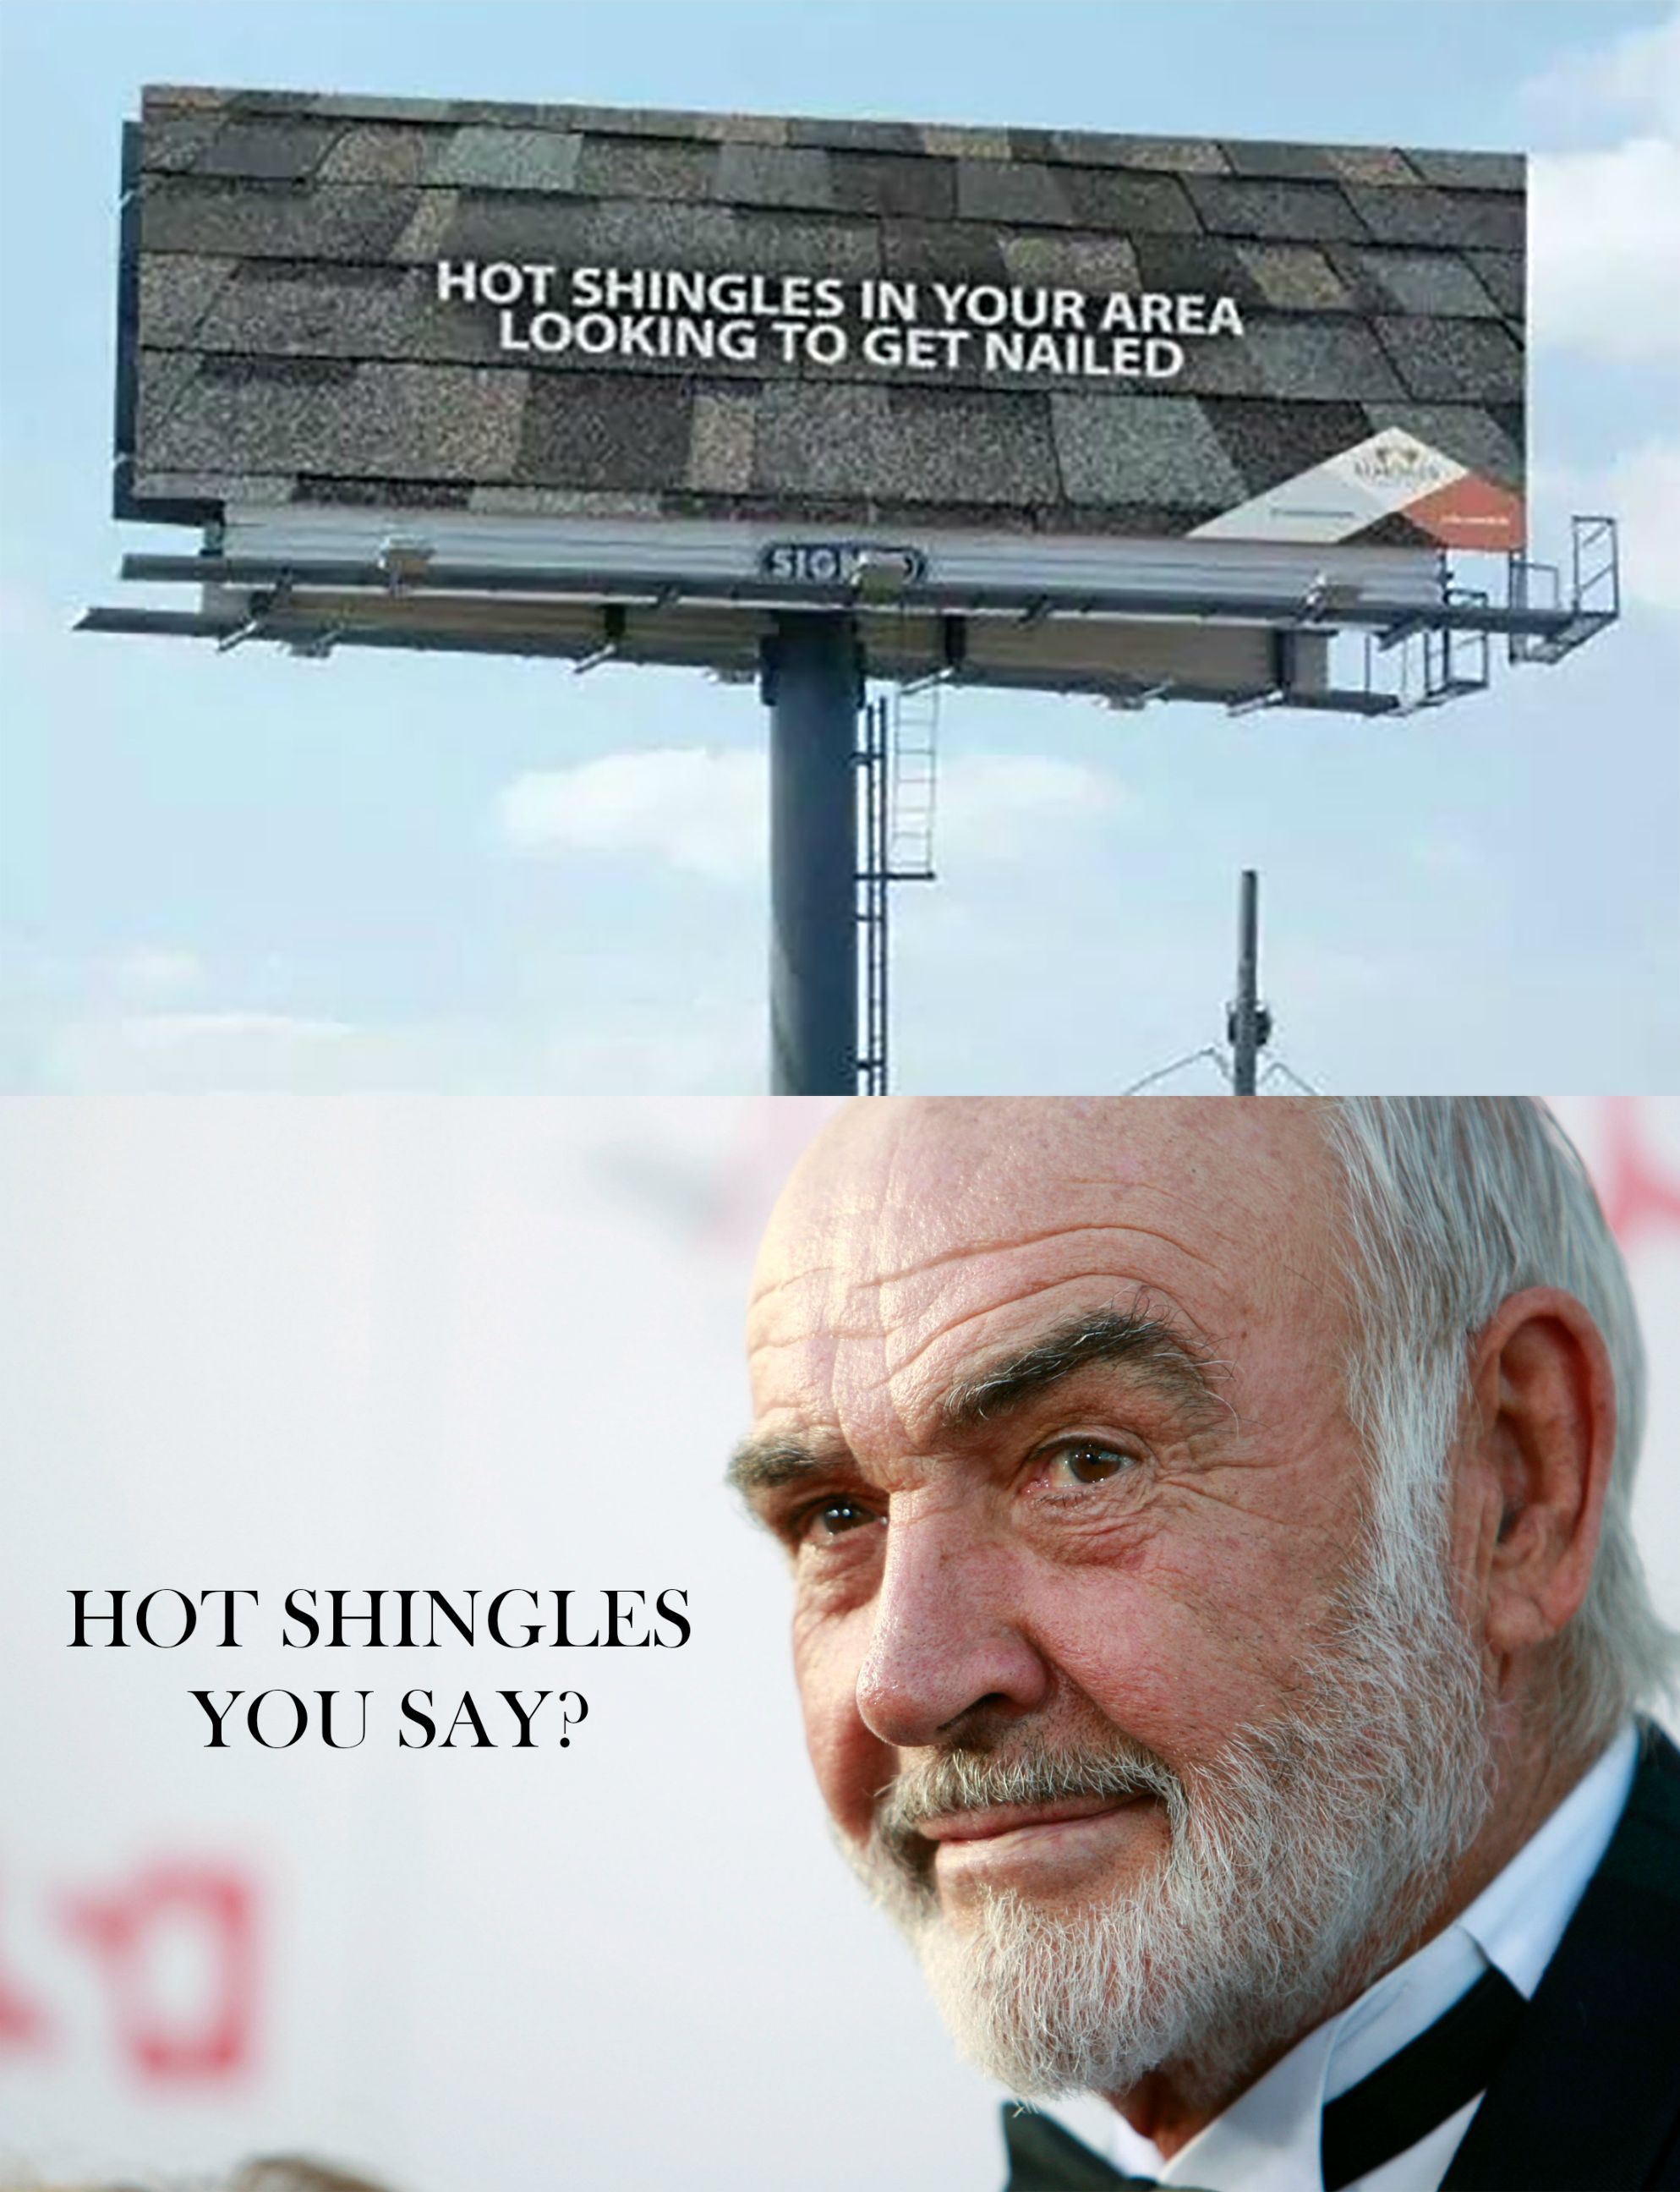 Hot shingles you say?